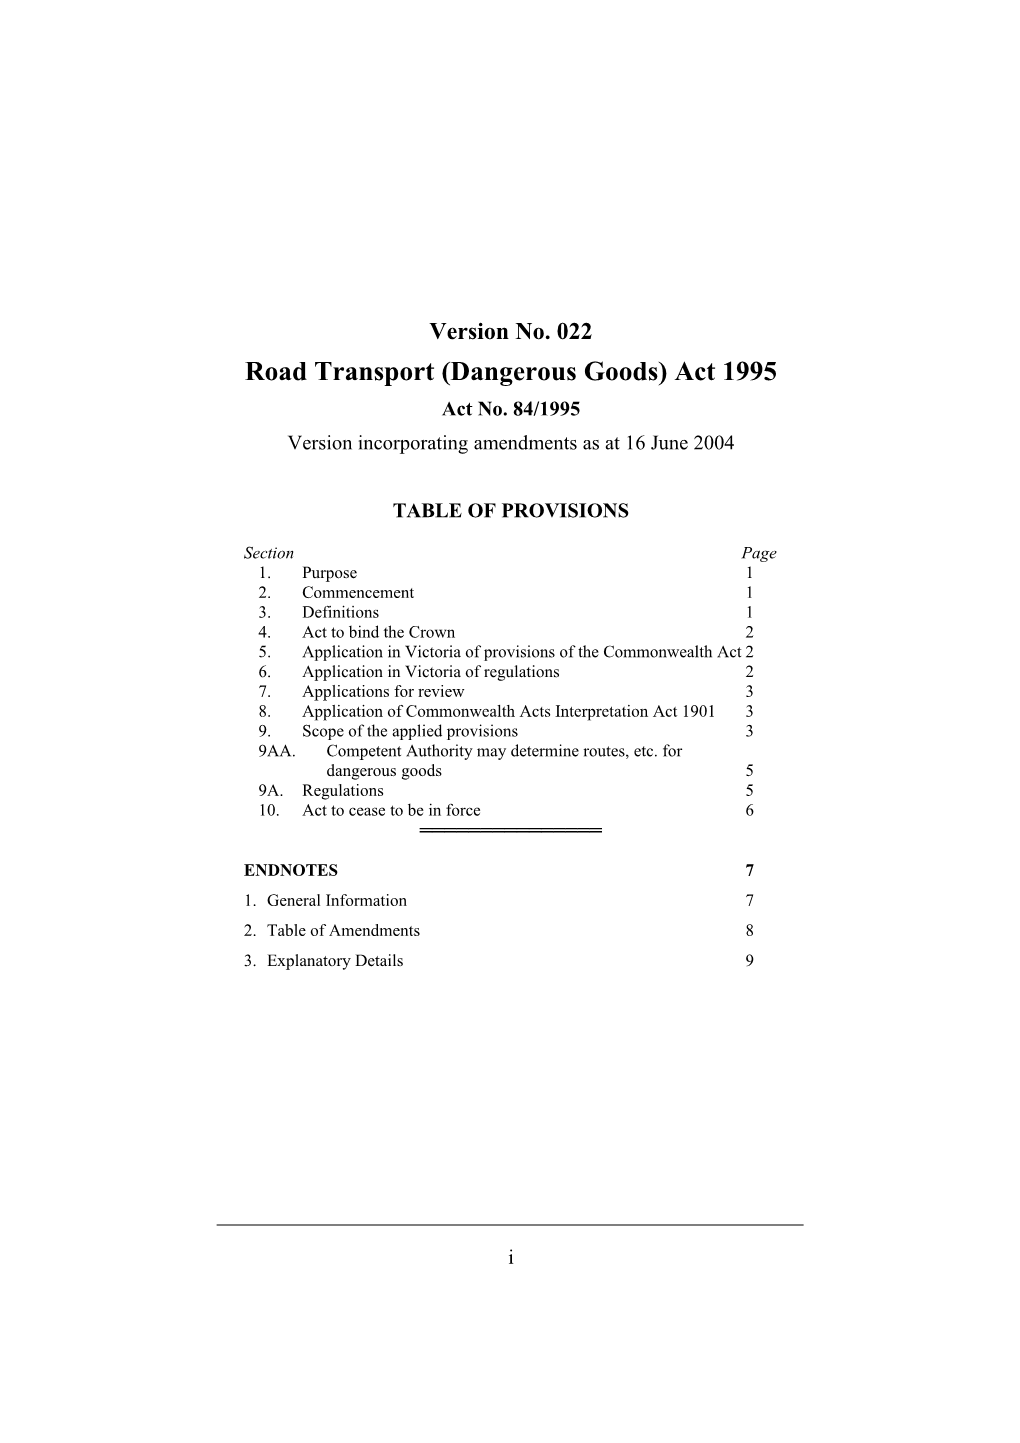 Road Transport (Dangerous Goods) Act 1995